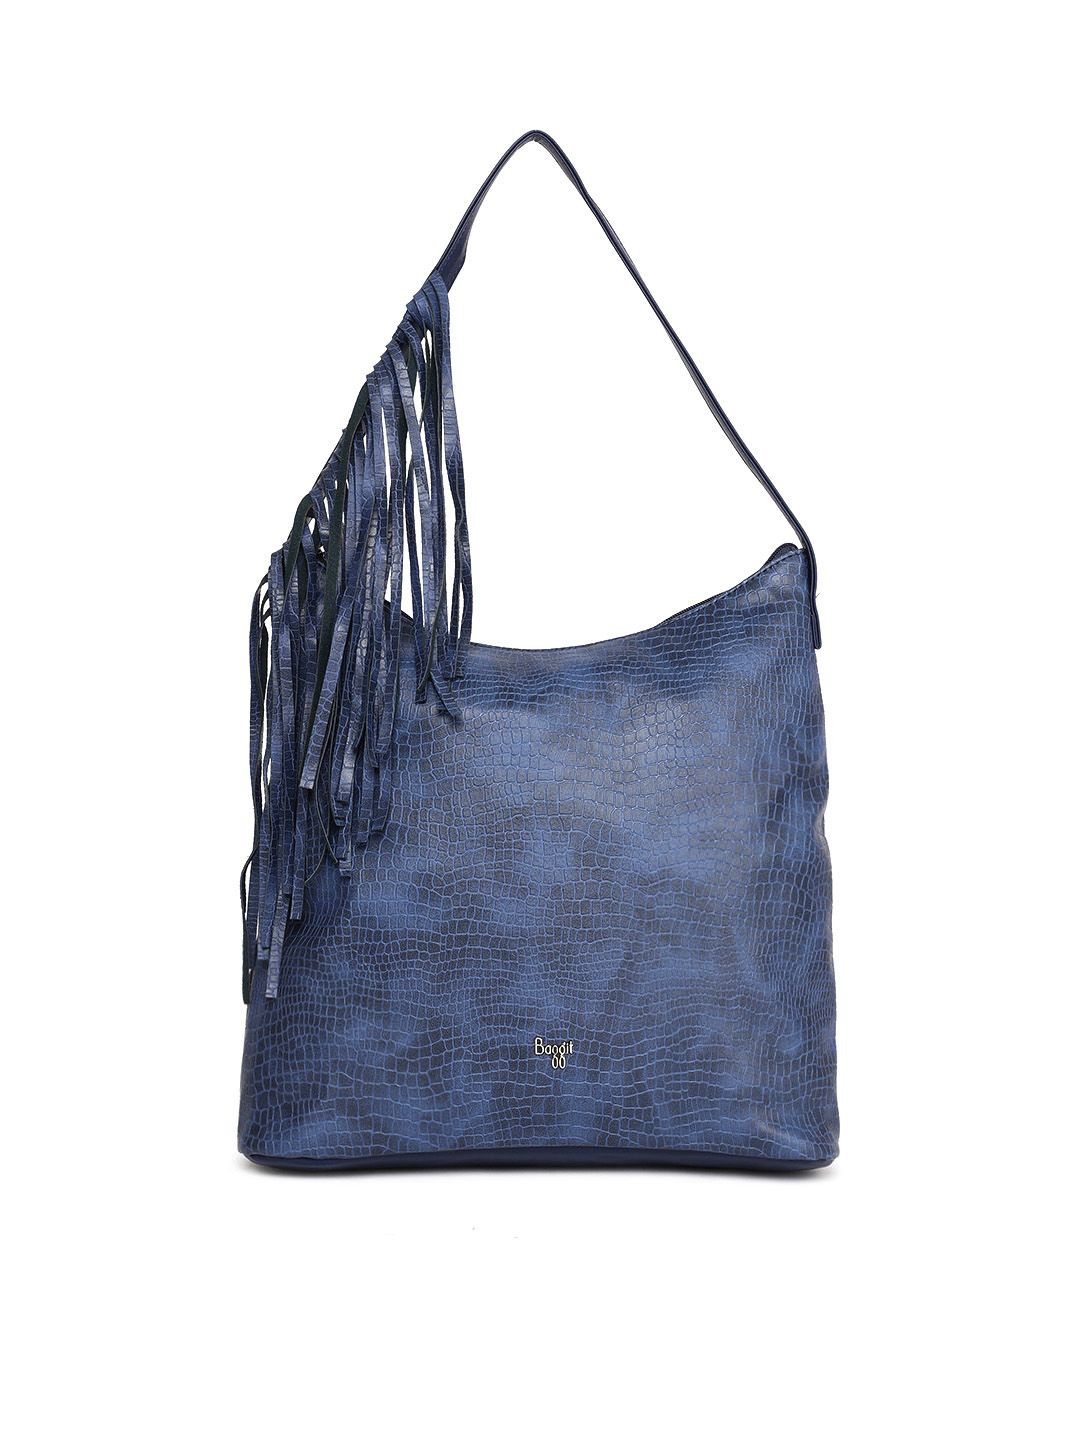 Baggit Women LXE3 Porter Y G Z E Zola Navy Blue Textured Hobo Bag Price in India